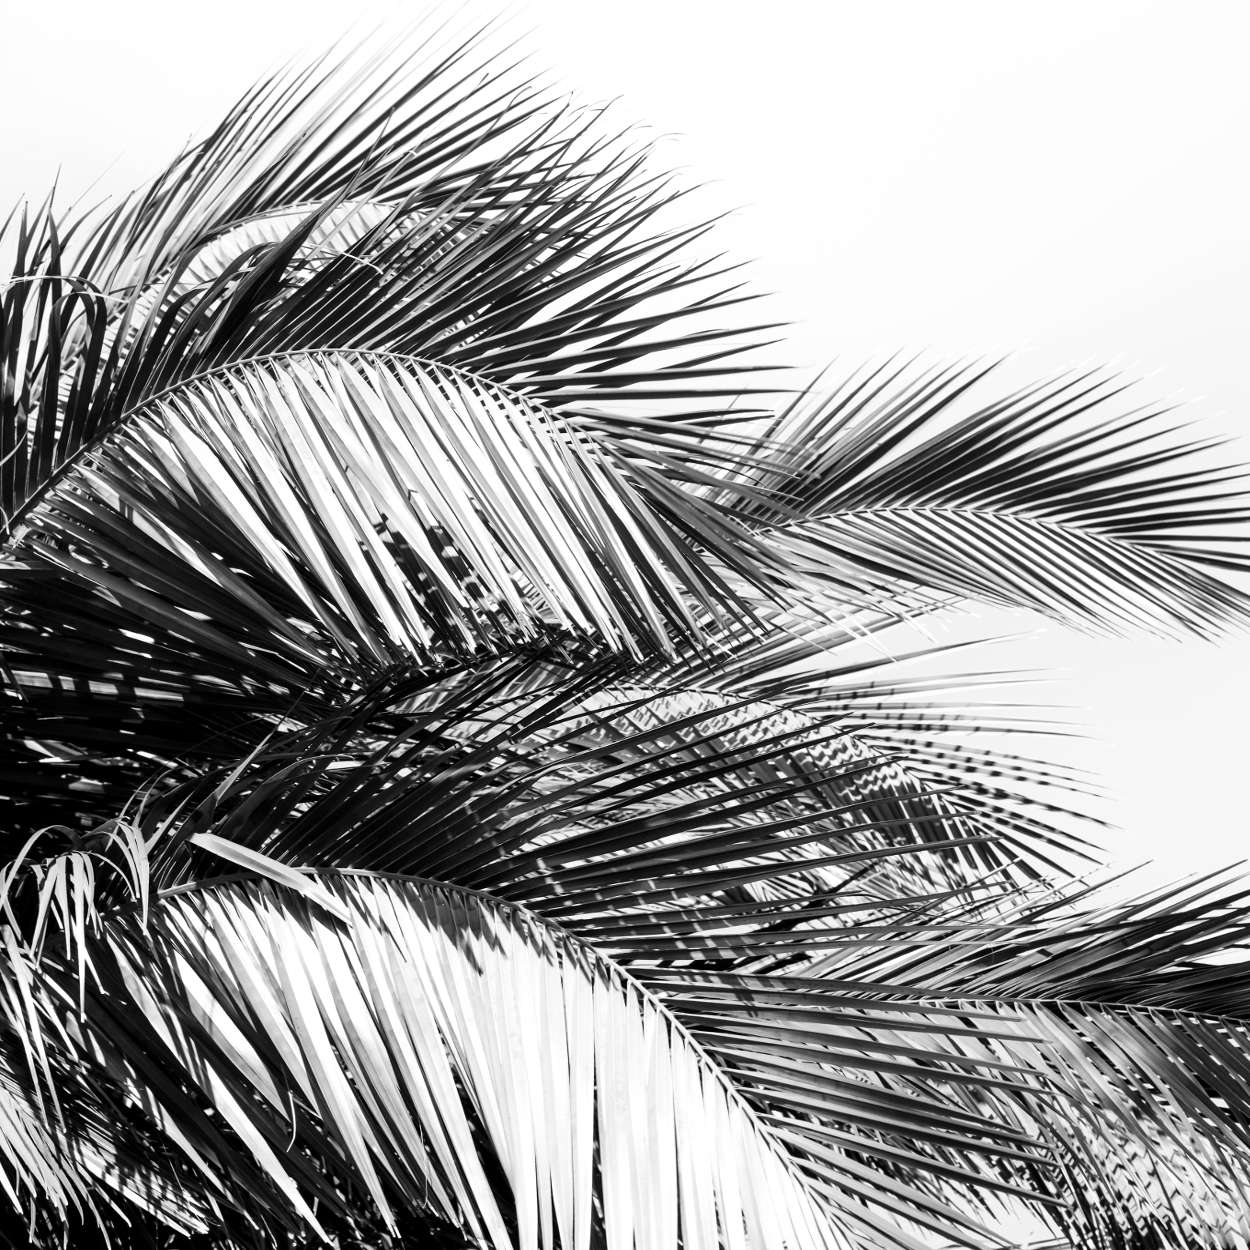 Black & White Palm Leaves I Square